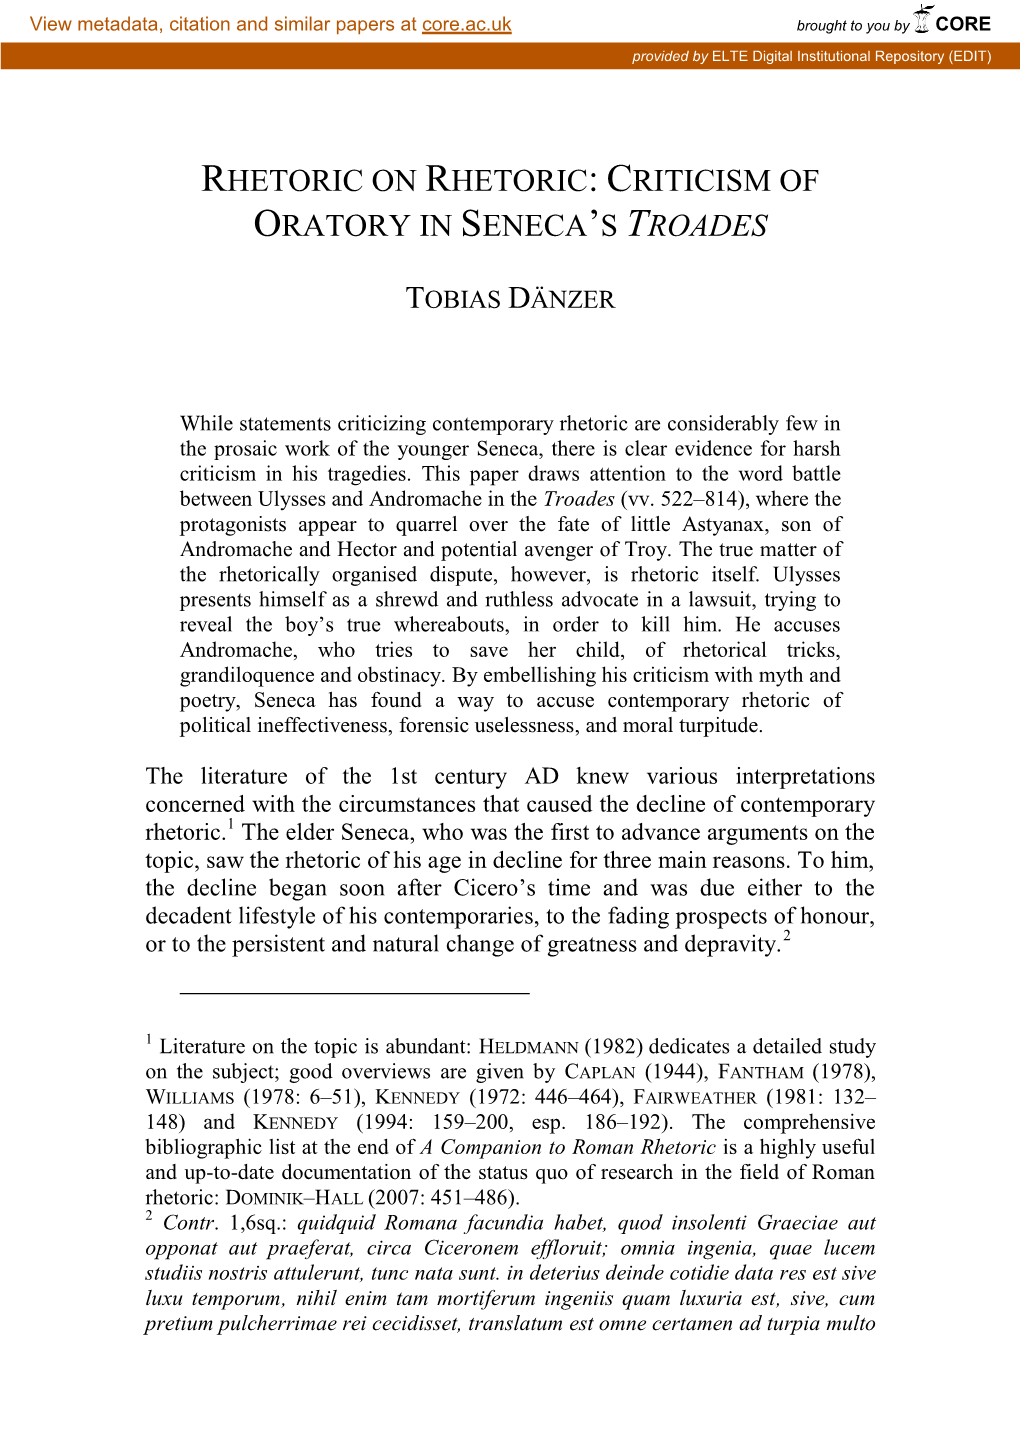 Rhetoric on Rhetoric: Criticism of Oratory in Seneca’S Troades